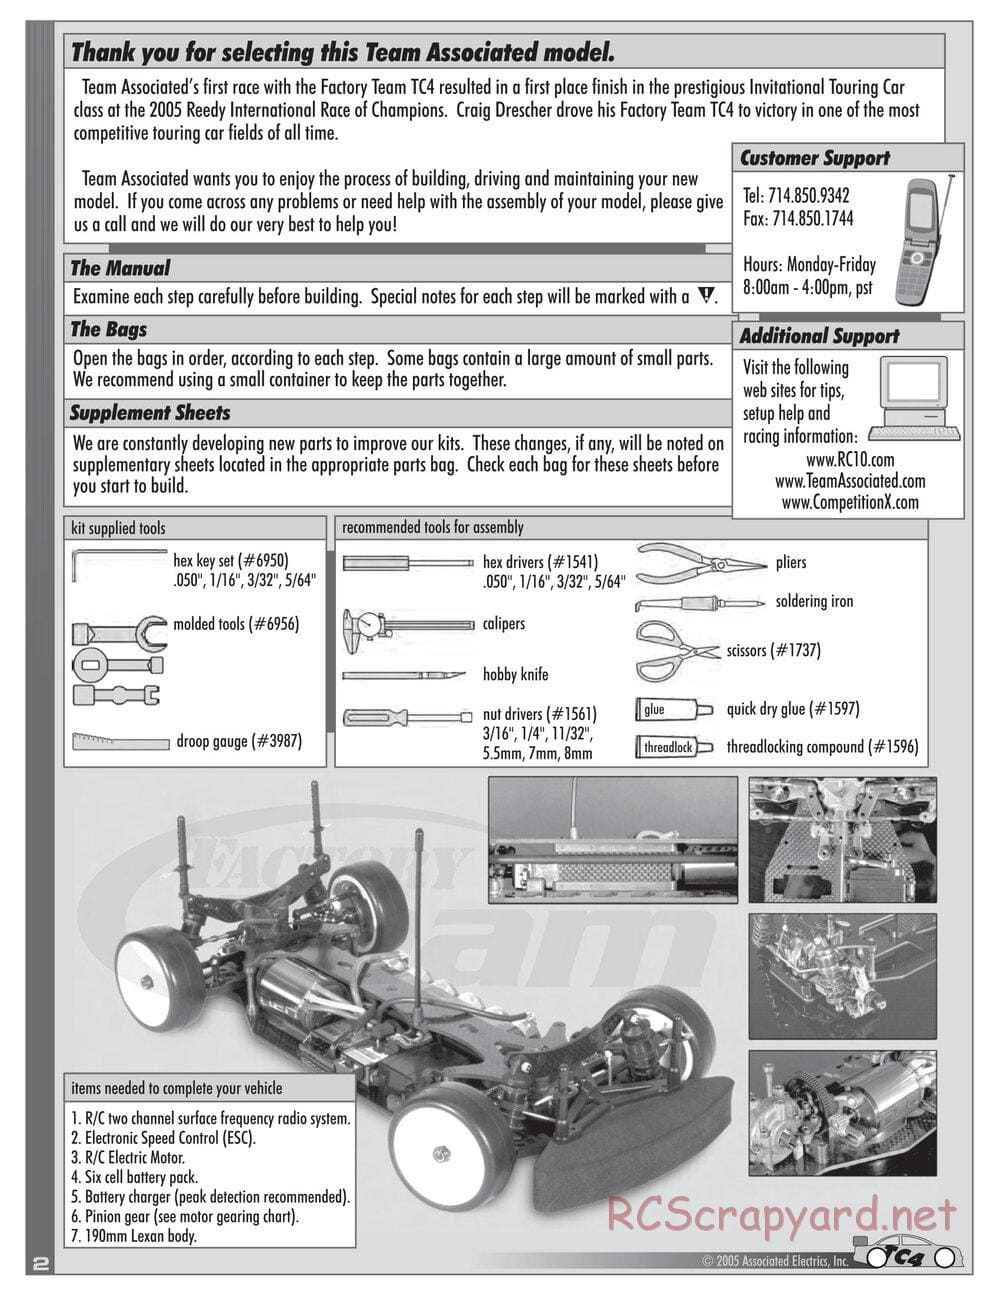 Team Associated - TC4 Factory Team - Manual - Page 2